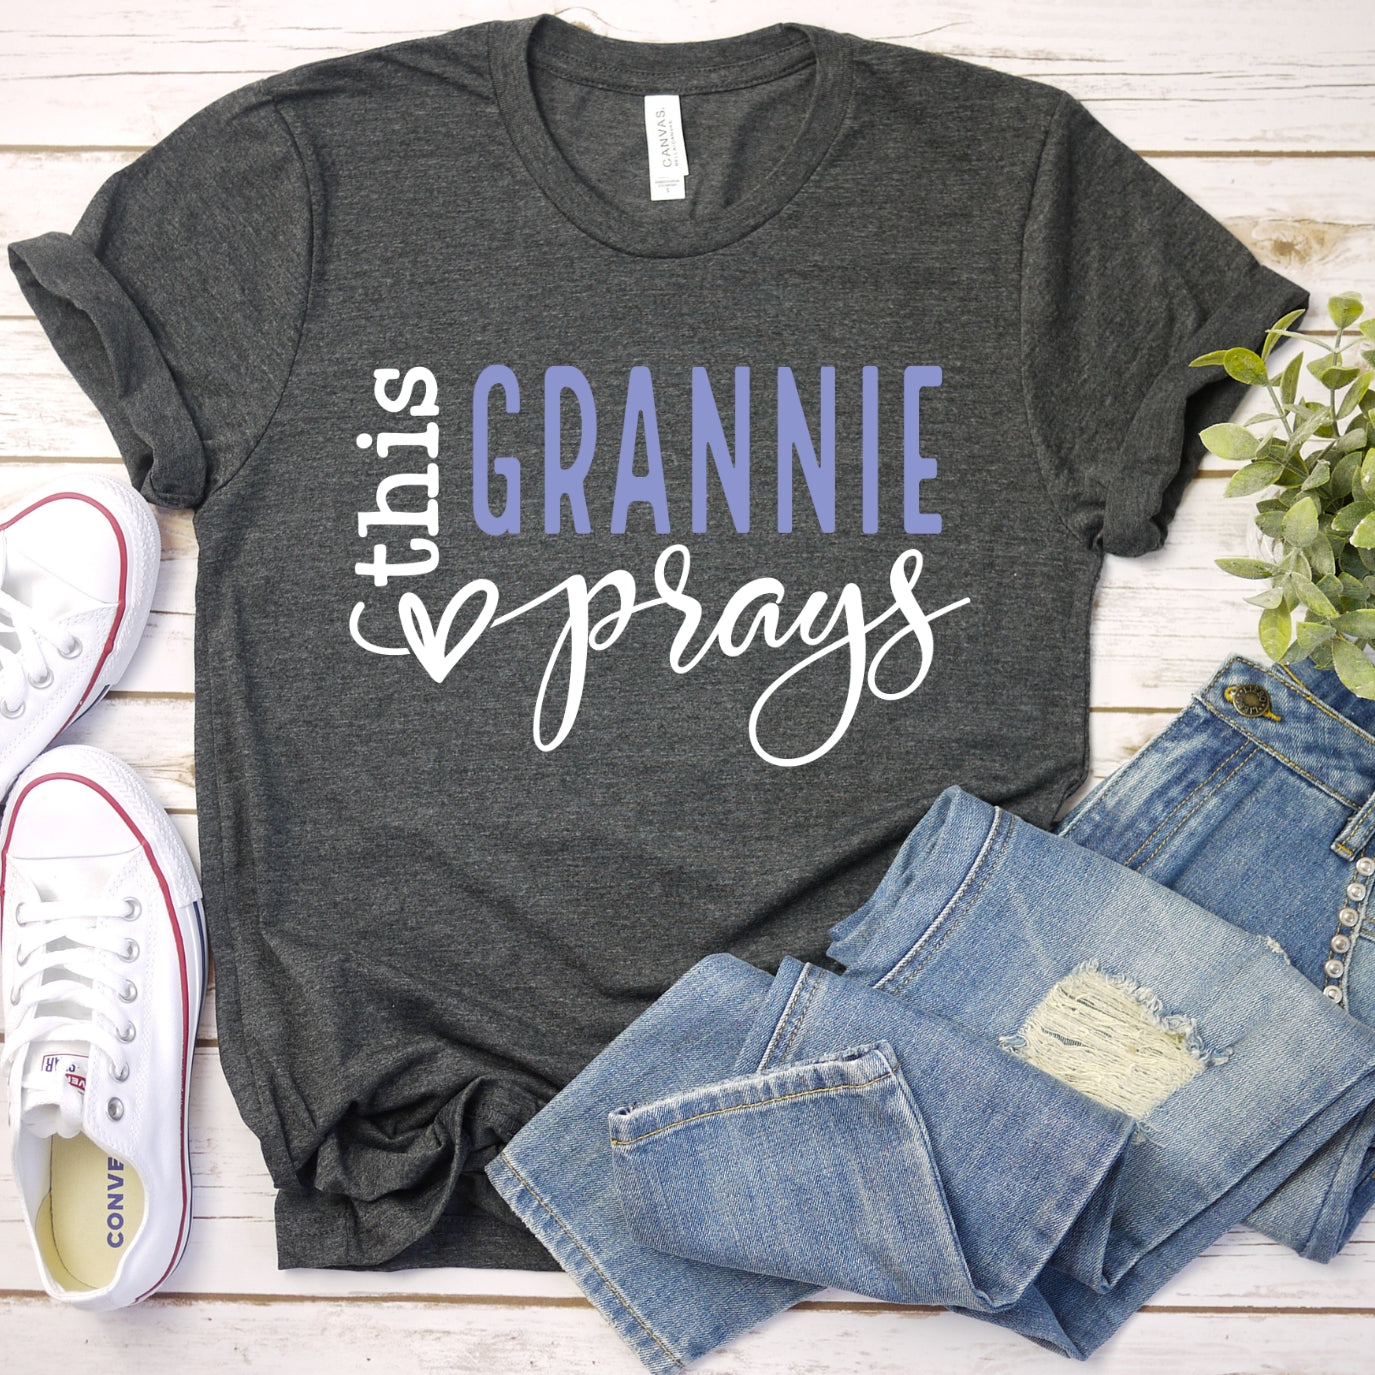 This Grannie Prays Women's T-Shirt